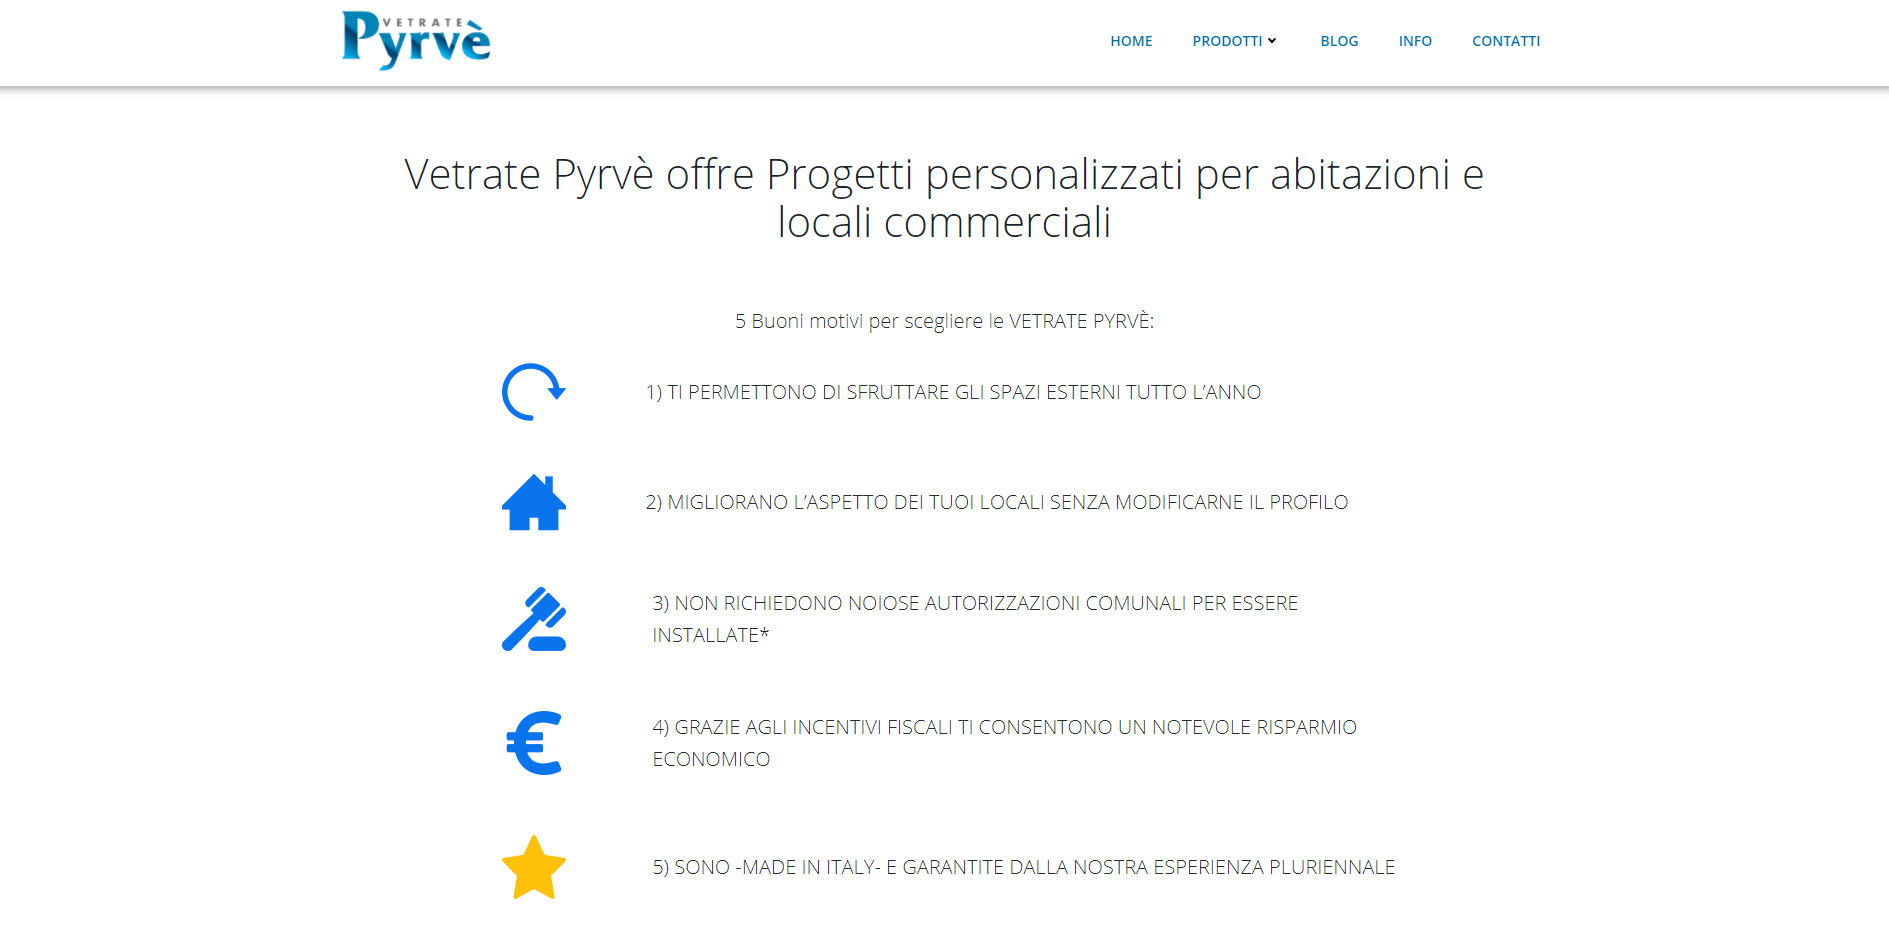 propathos-portfolio-pyrve-pagina-prodotto-elenco